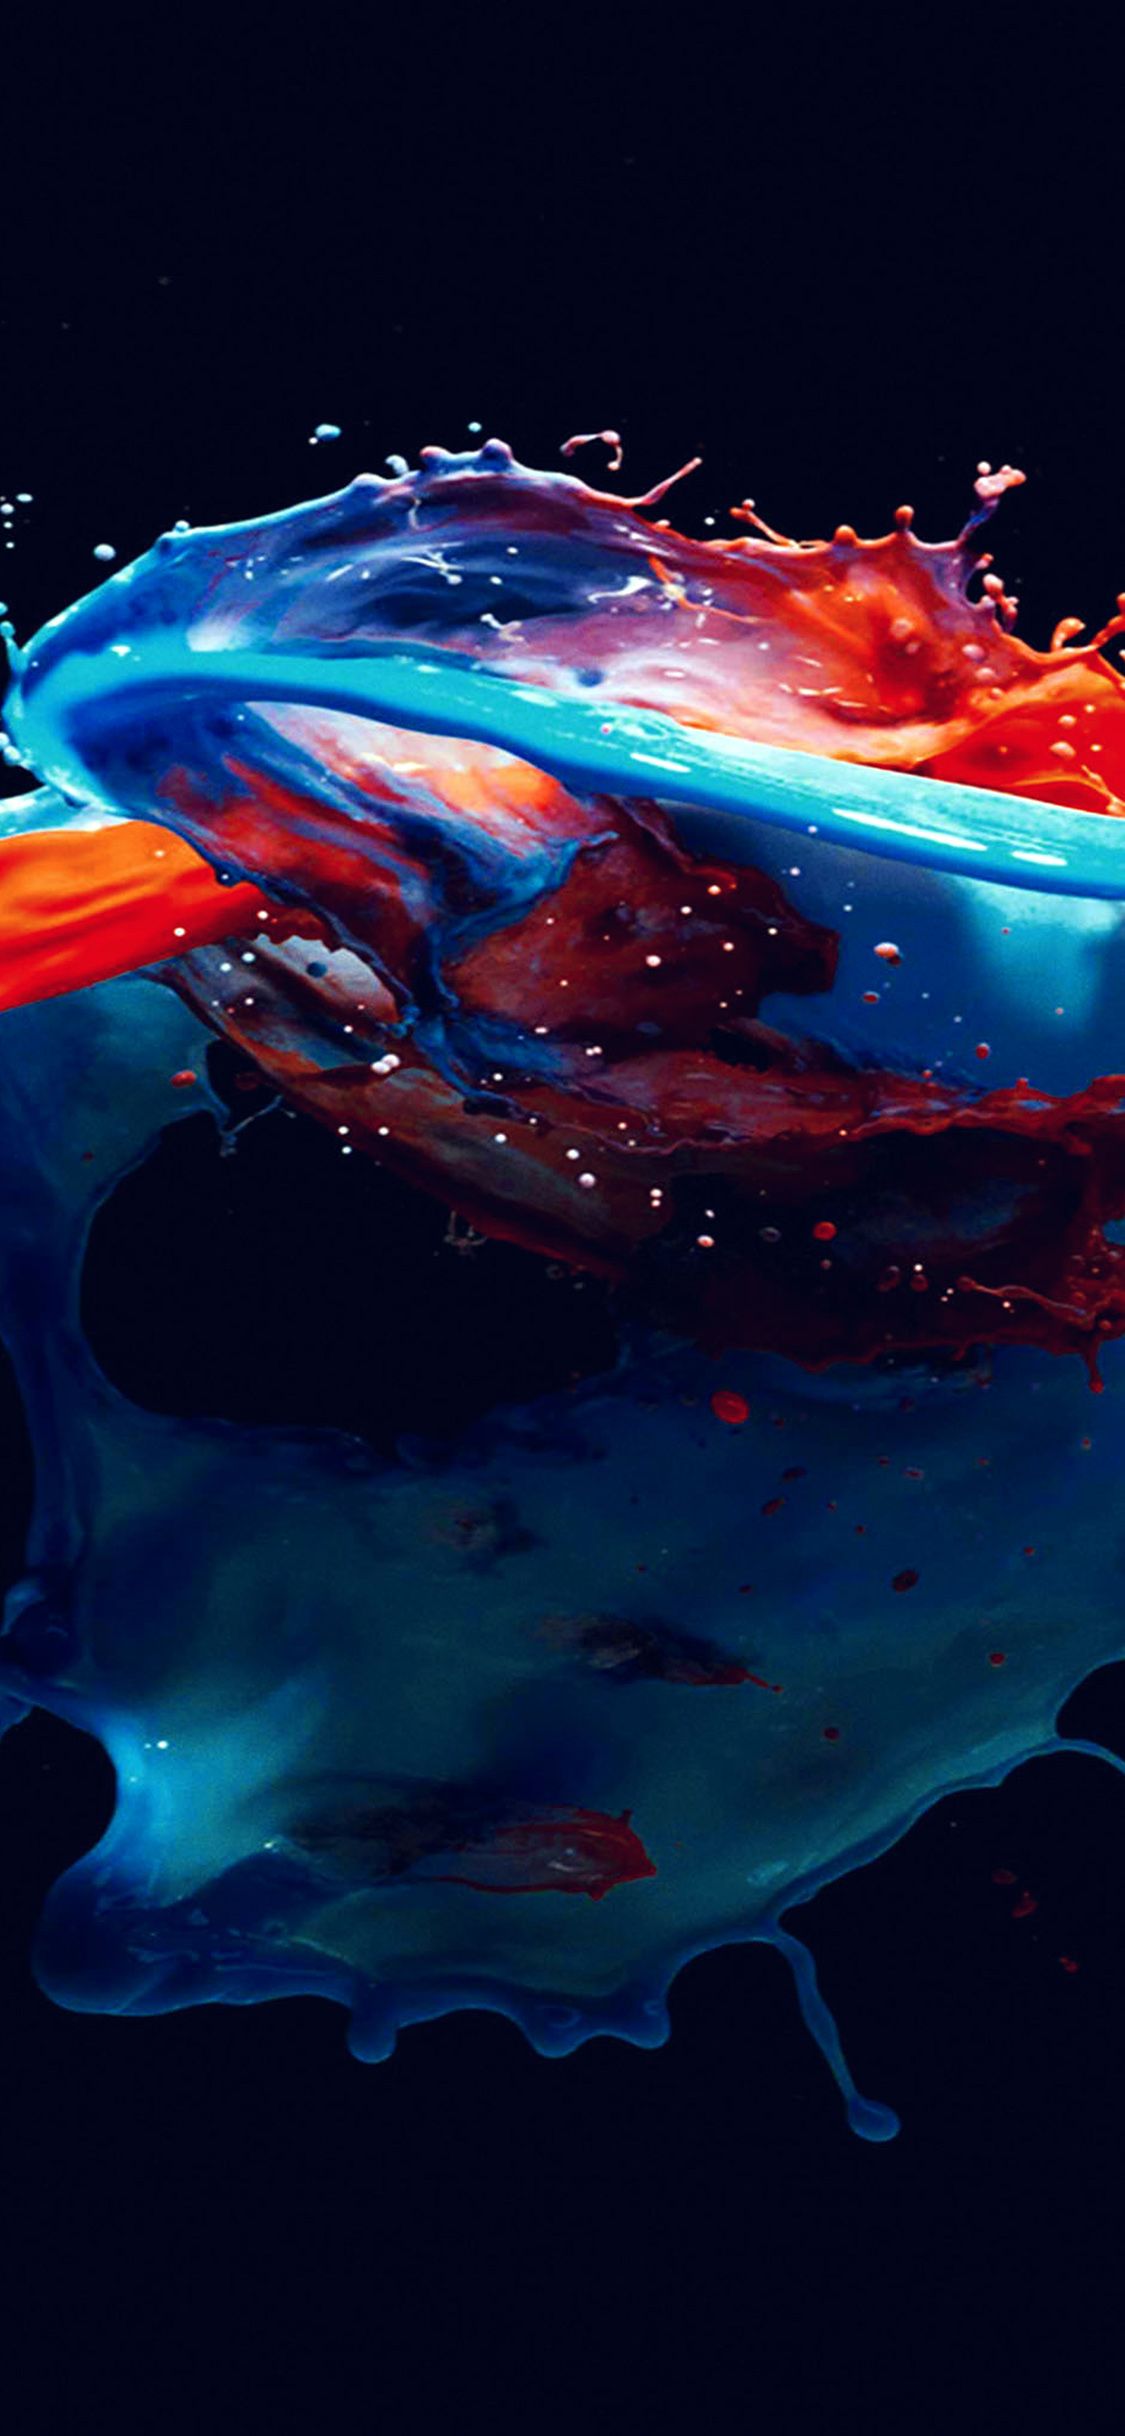 iPhone X wallpaper. paint splash art illust dark blue red watercolor